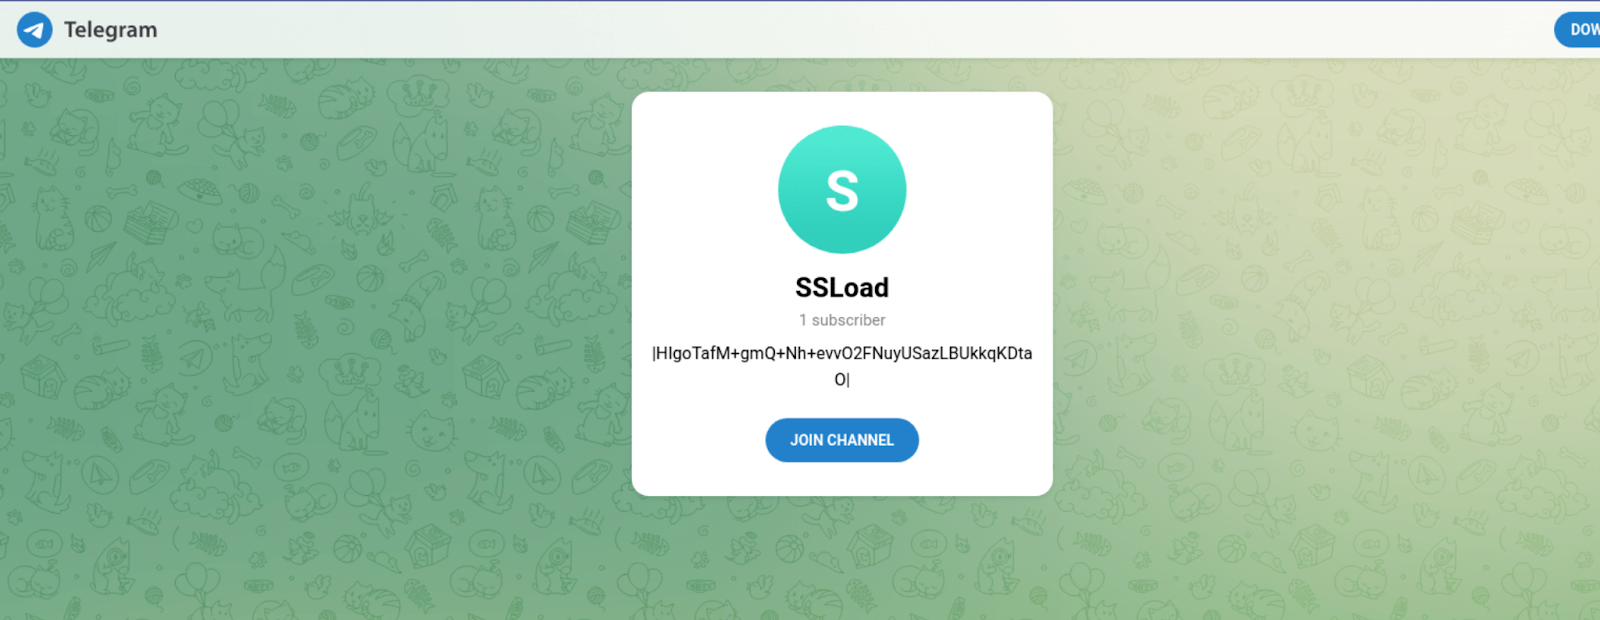 SSLoad malware Telegram channel.